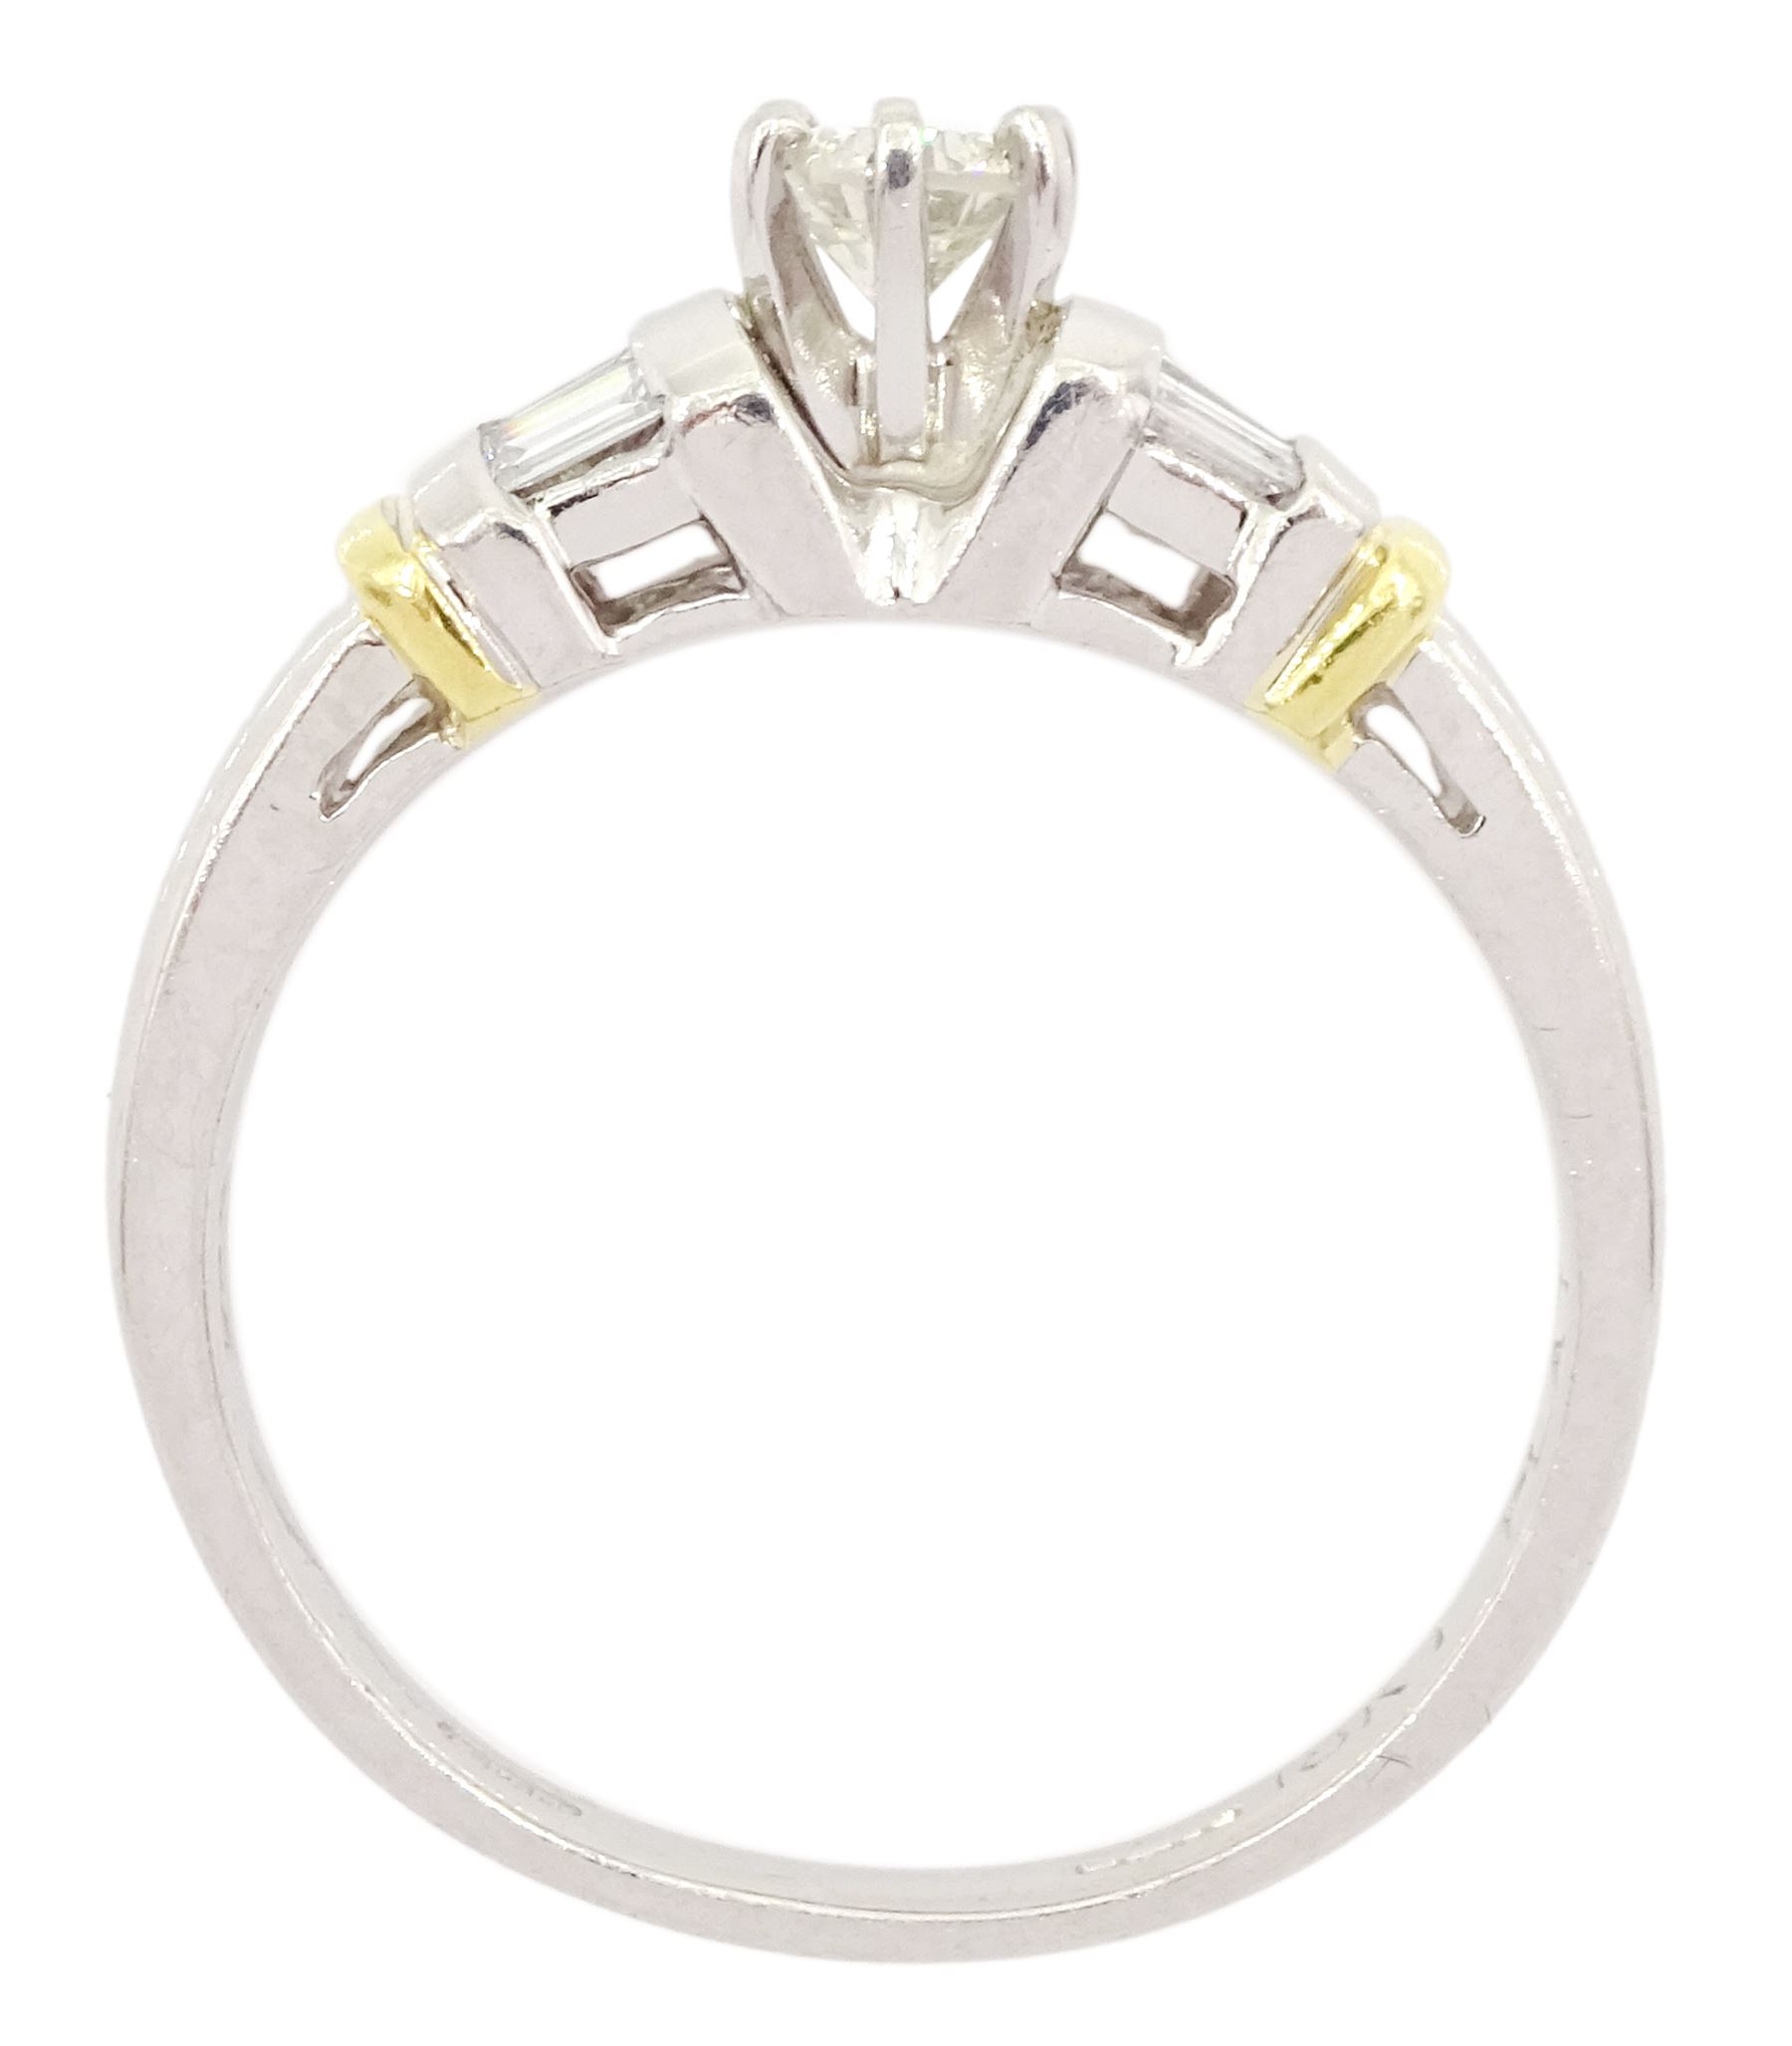 Platinum and 18ct gold single stone round brilliant cut diamond ring - Image 4 of 4